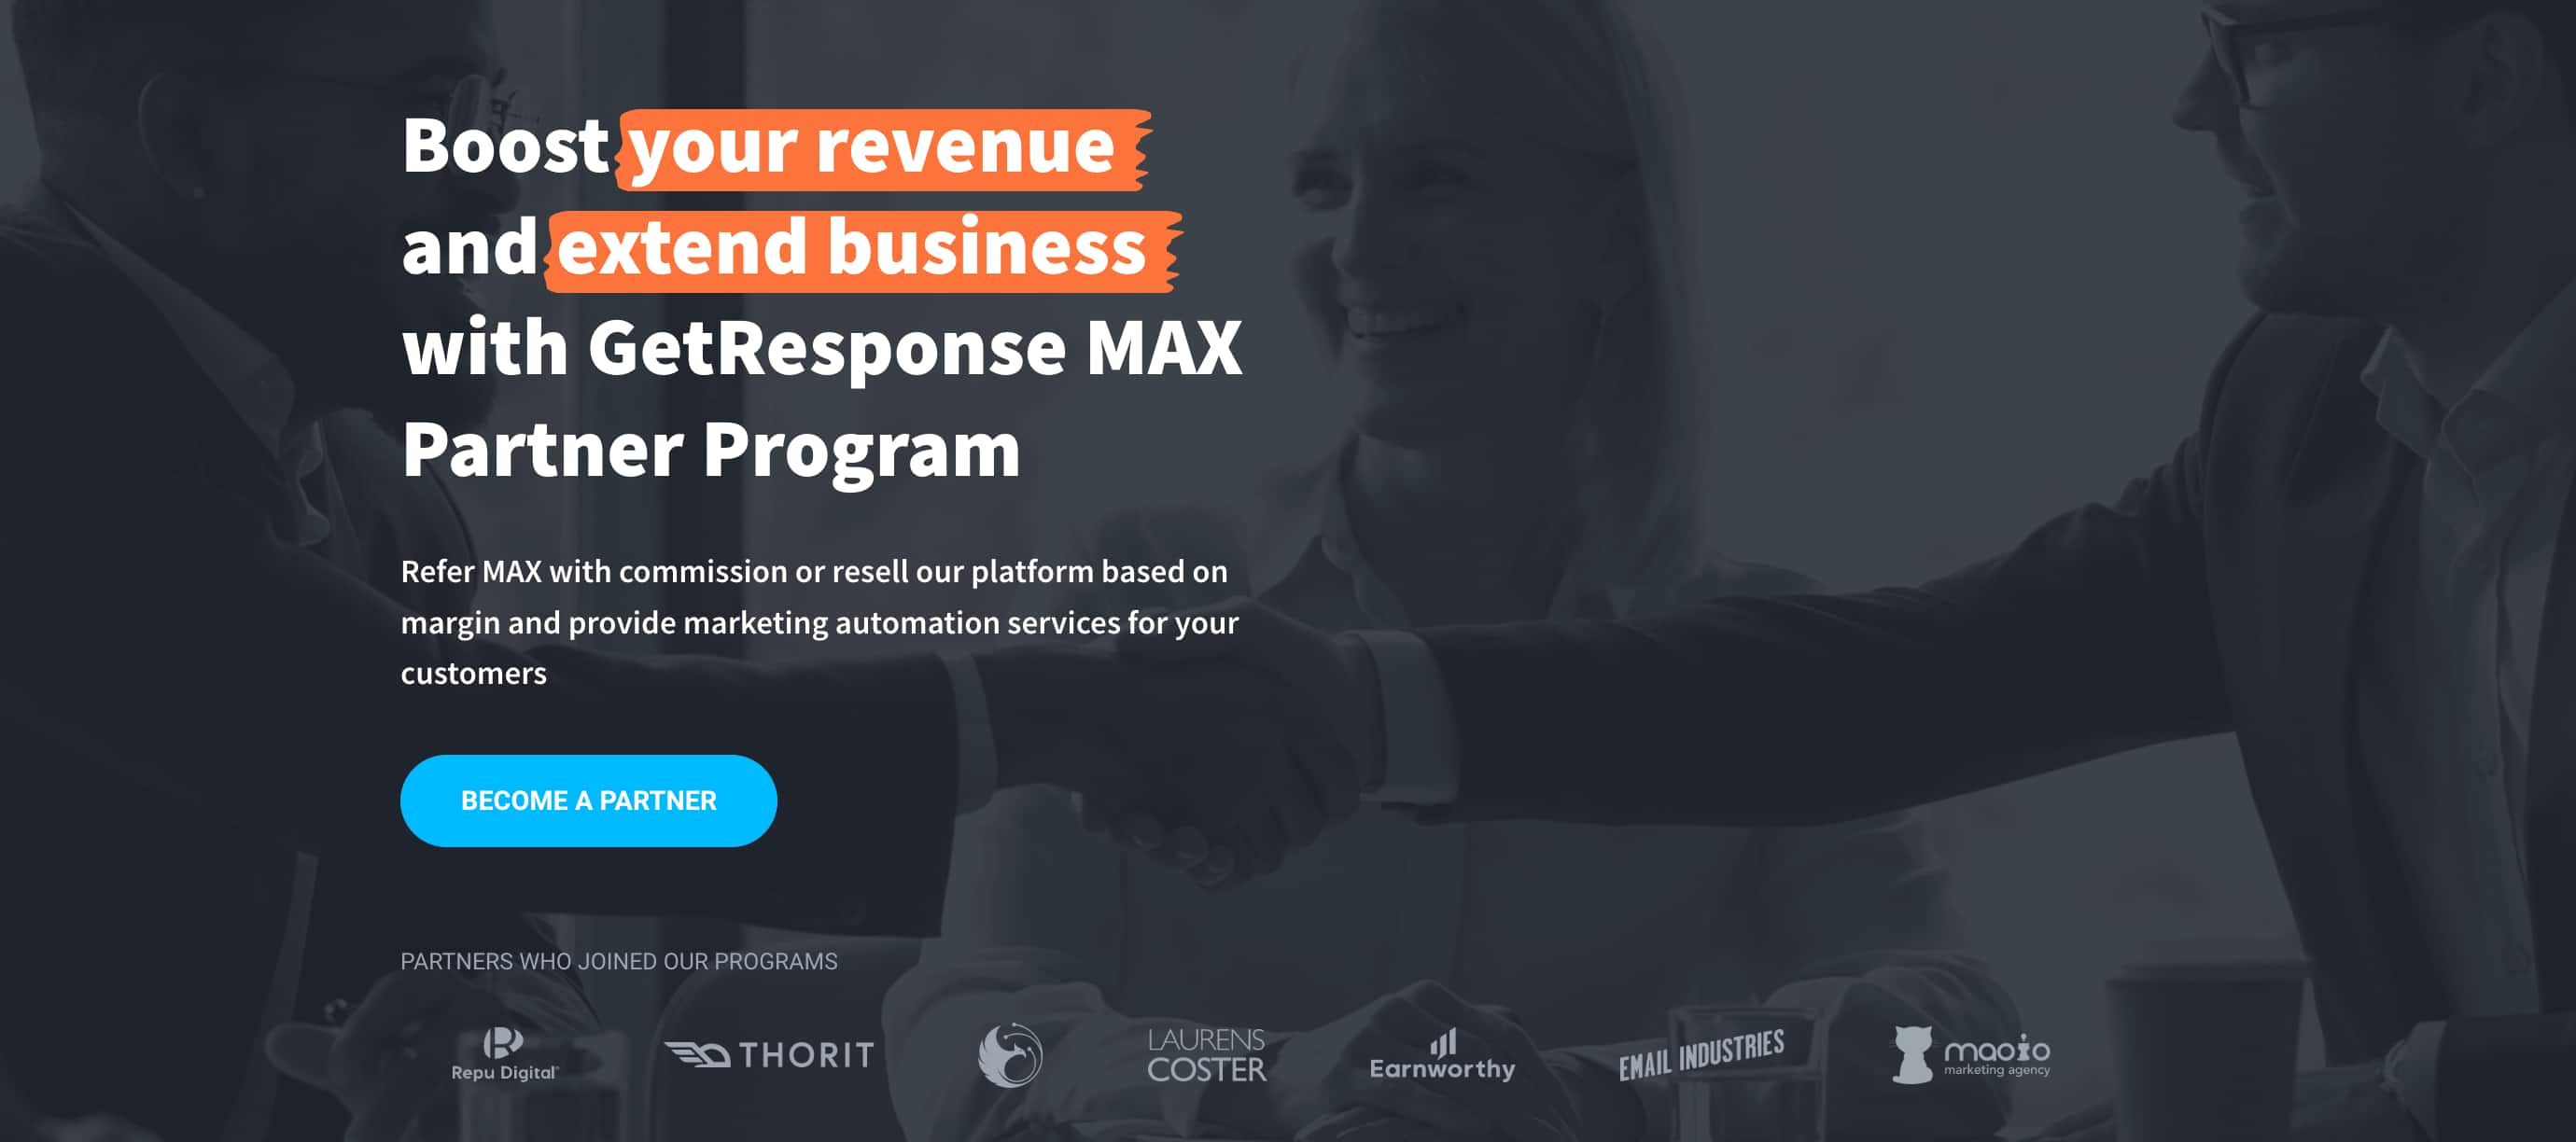 GetResponse MAX partner program for marketing agencies